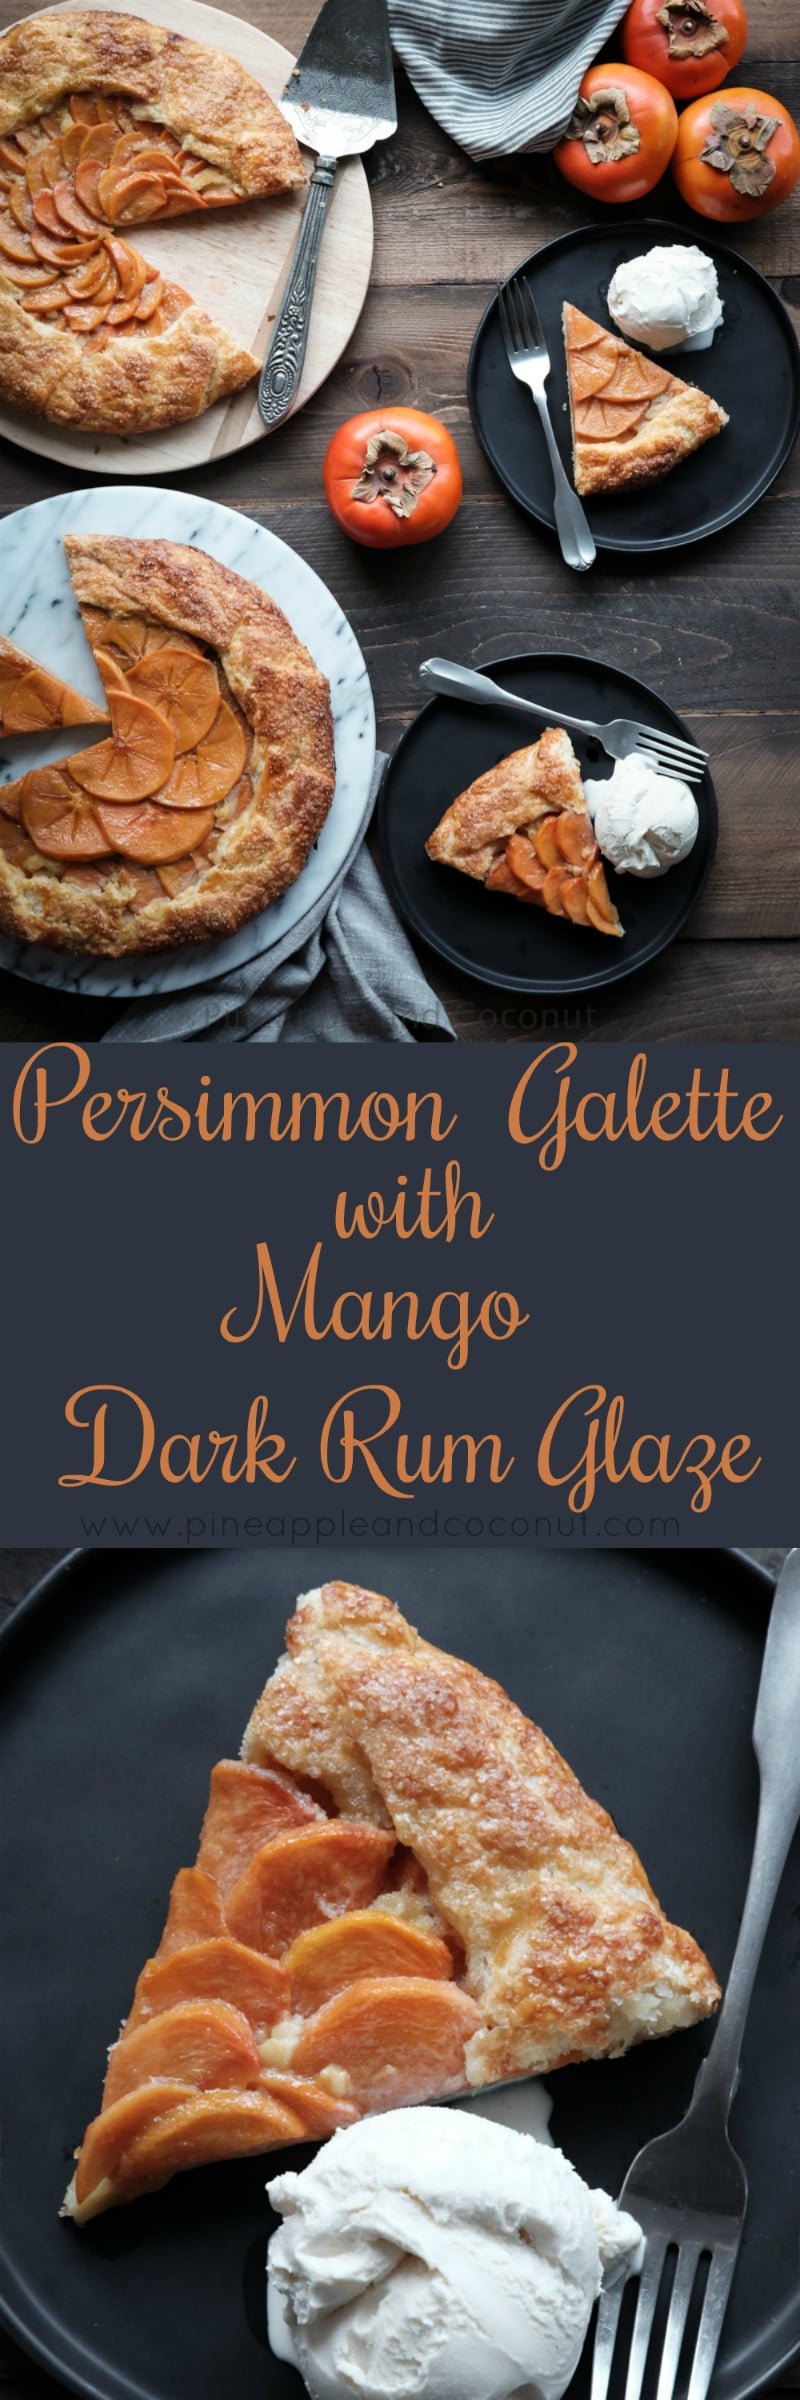 Persimmon Galette with Mango Rum Glaze With Mango Dark Rum Glaze www.pineappleandcoconut.com